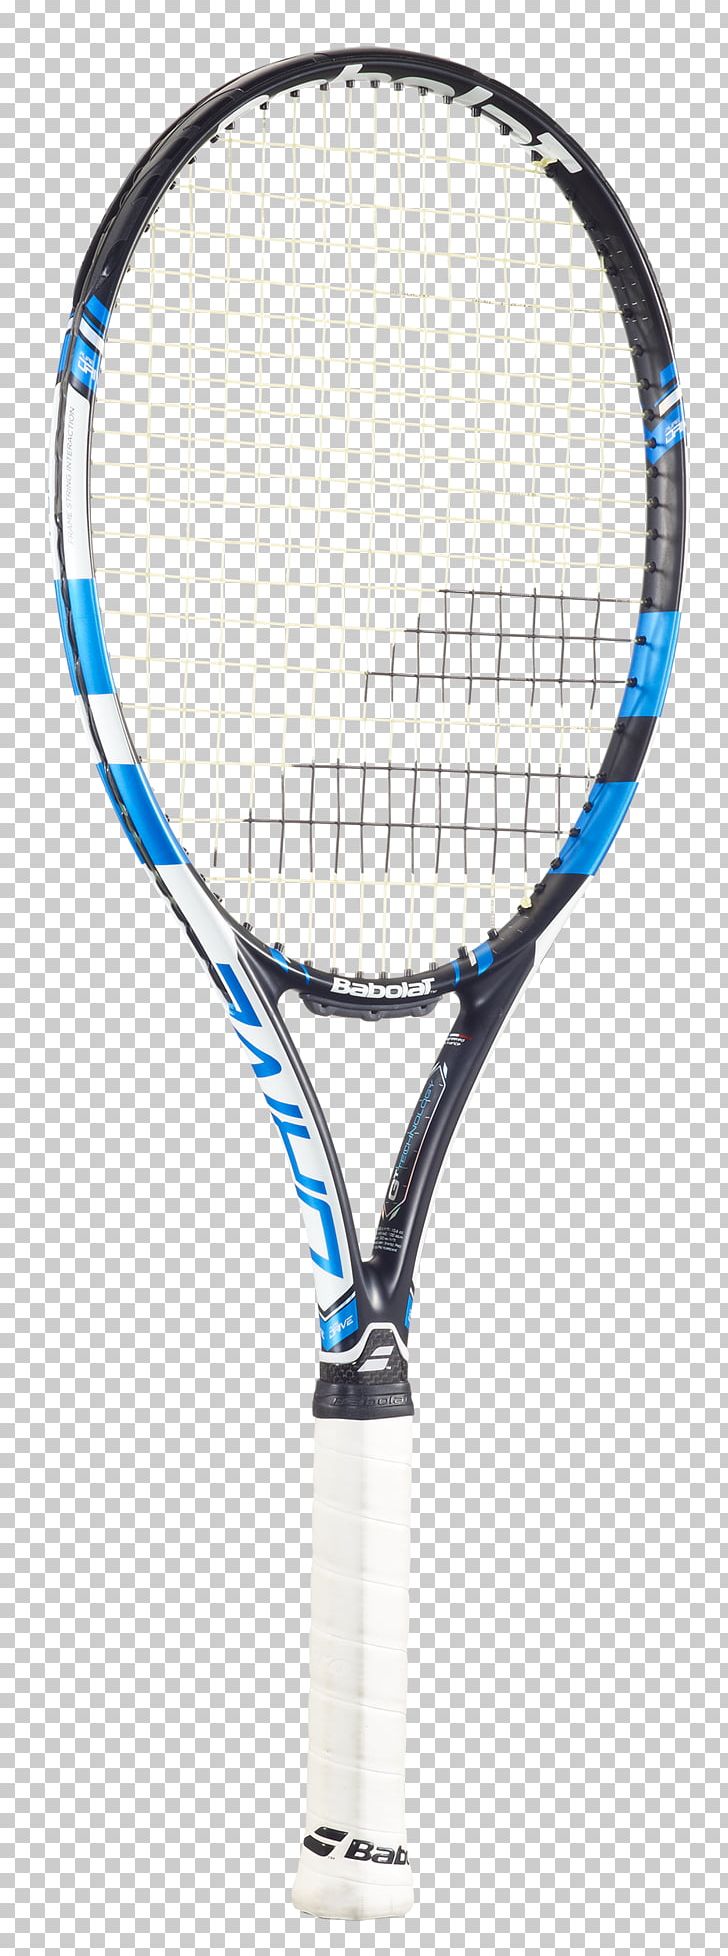 Babolat 2018 Pure Drive Plus Tennis Racquet Tennis Rackets PNG, Clipart, Babolat, Line, Racket, Rackets, Rakieta Tenisowa Free PNG Download